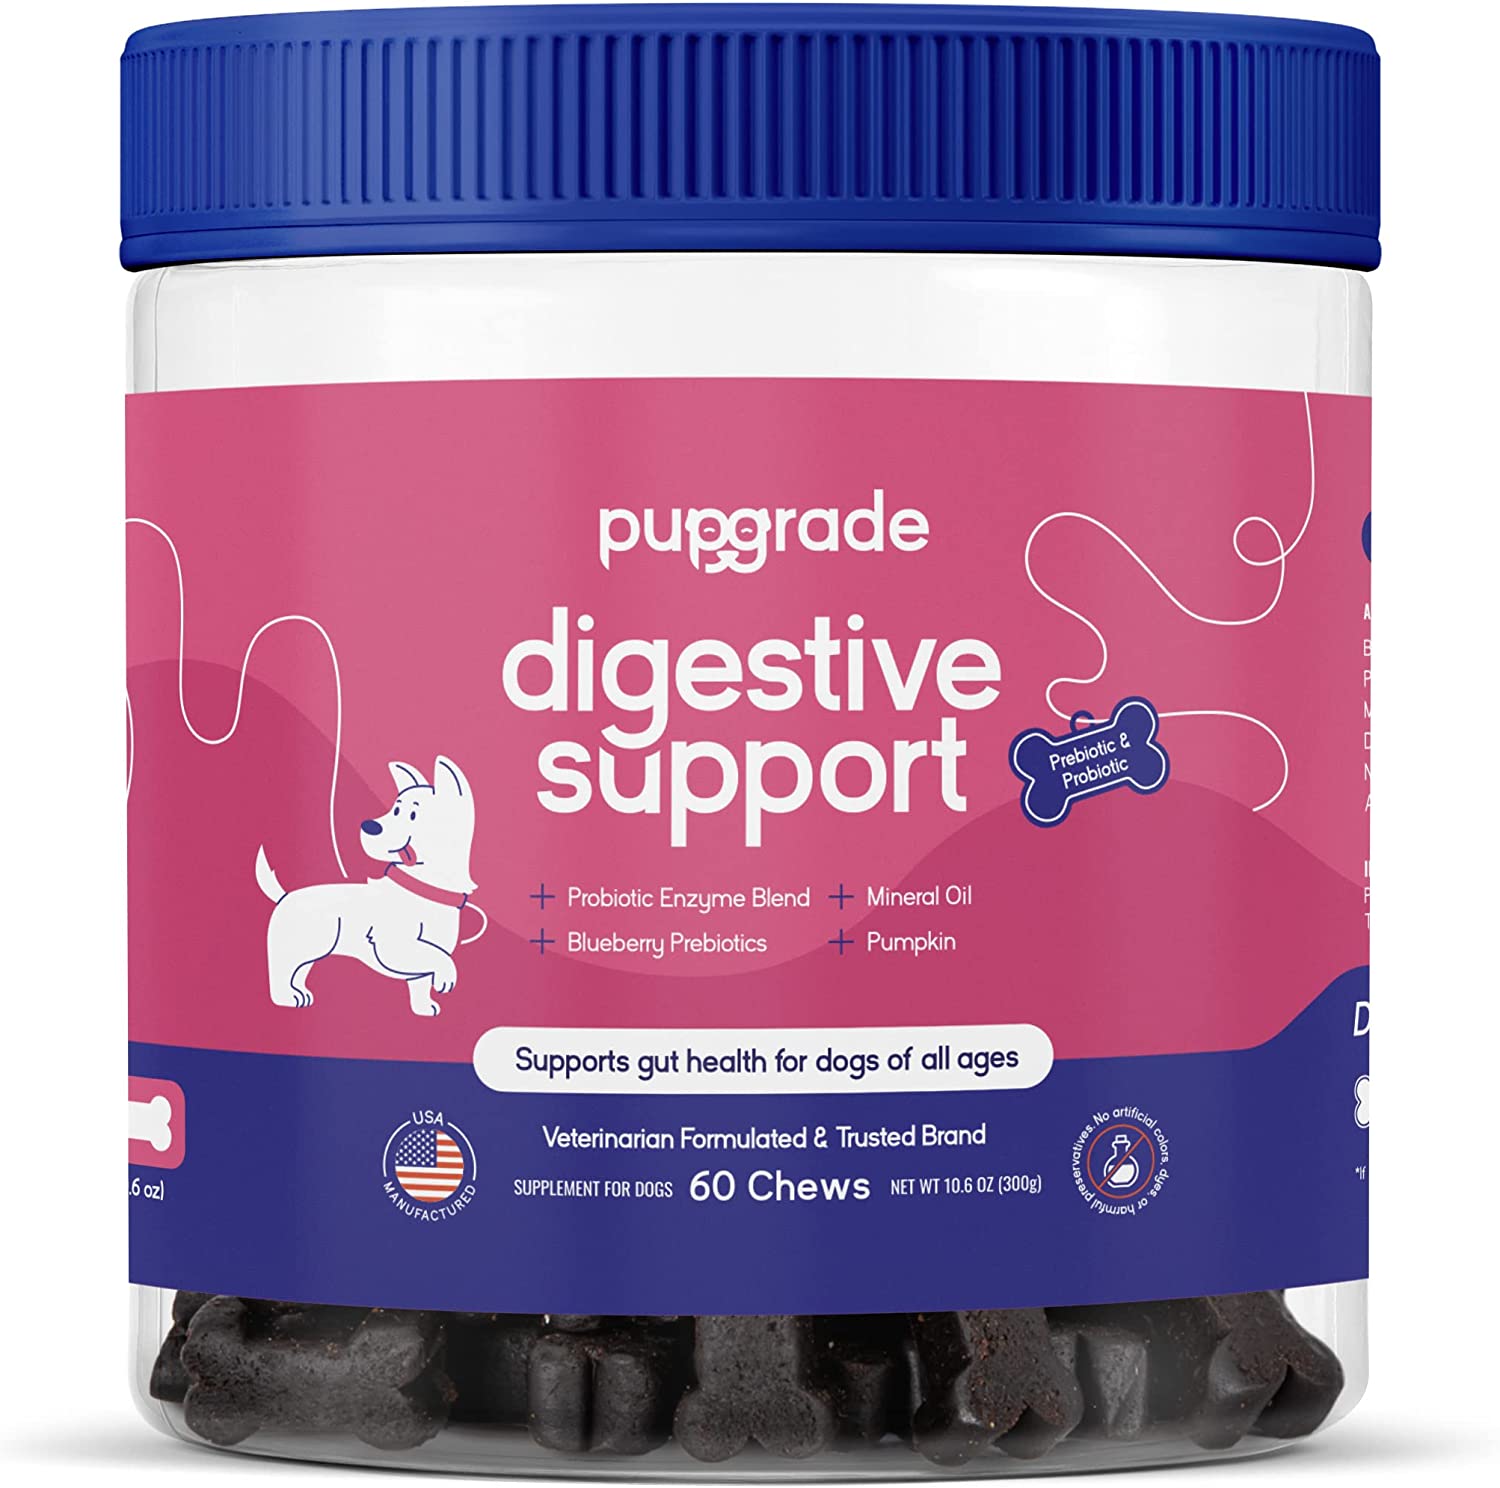 Pupgrade Digestive Chews